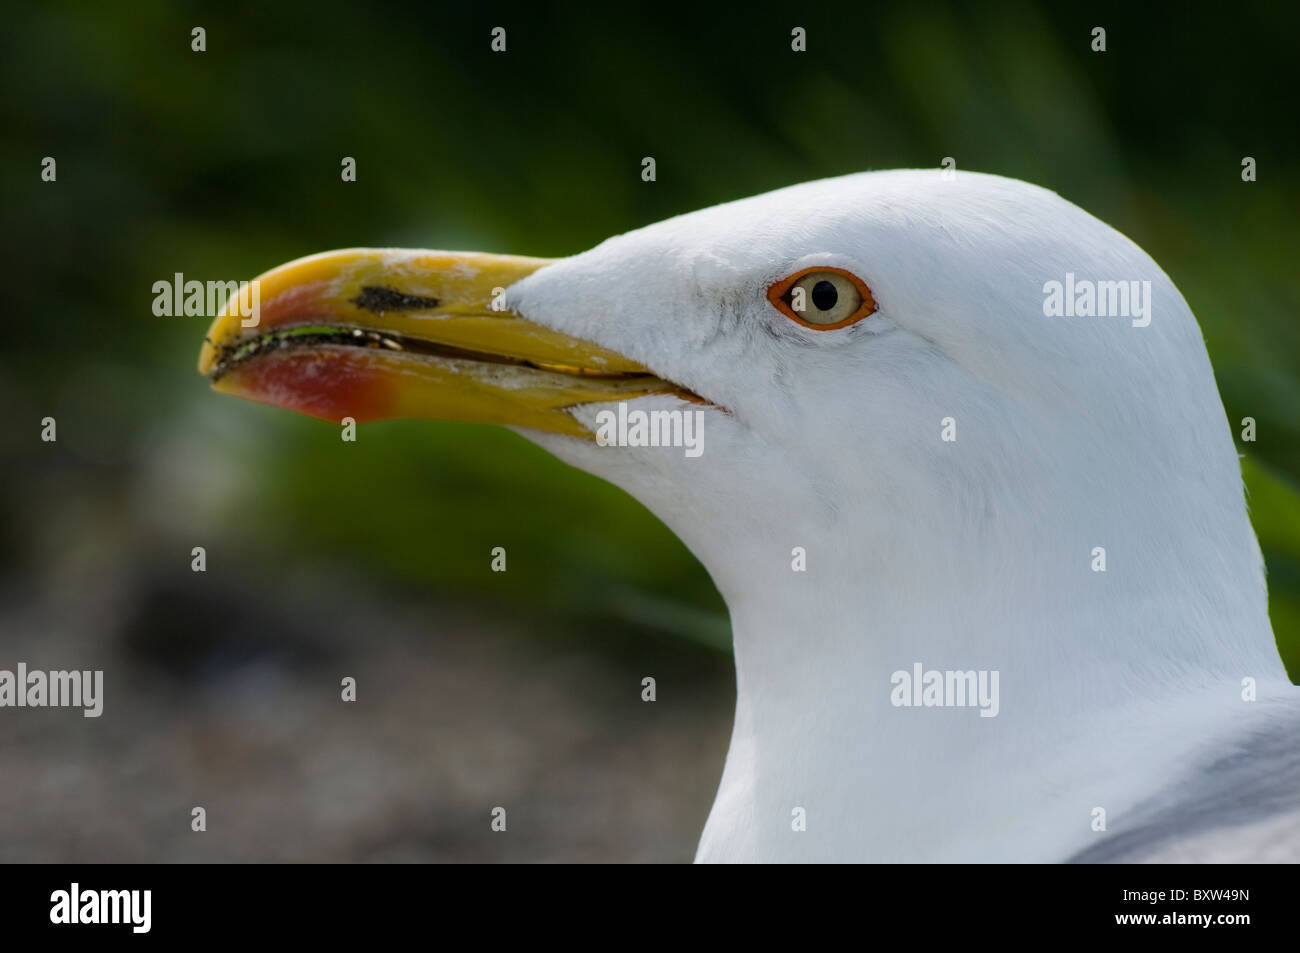 Yellow-legged gull portrait Stock Photo